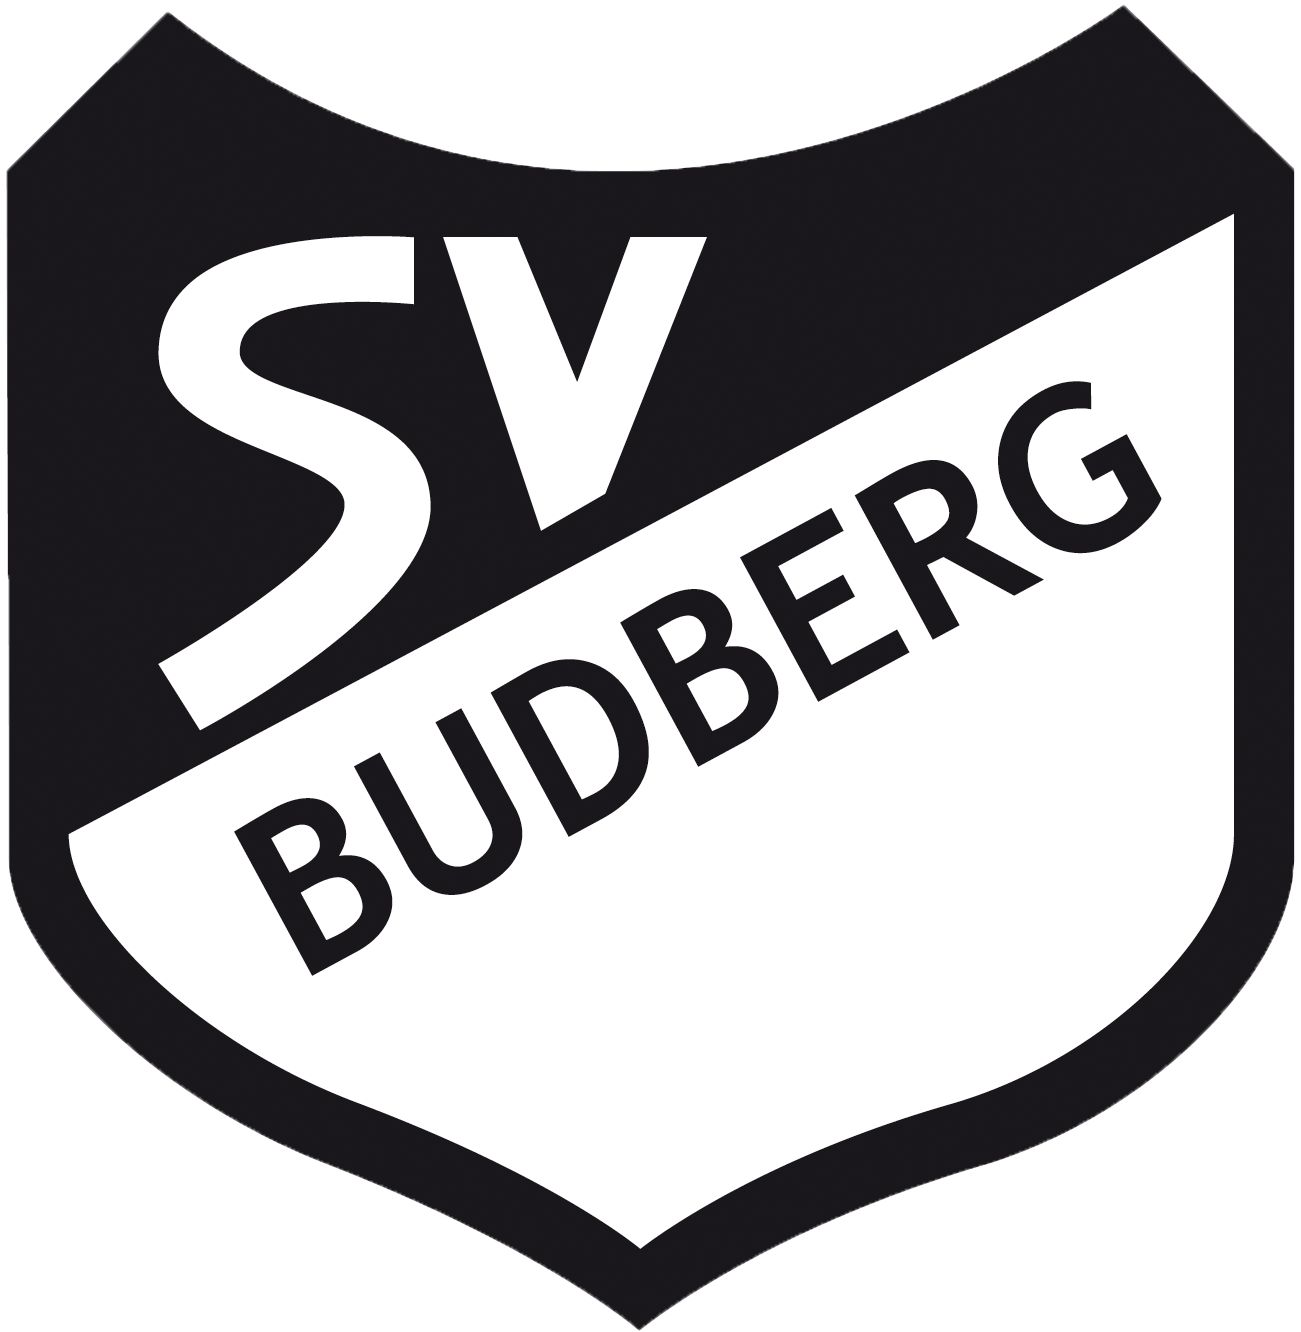 SV Budberg II